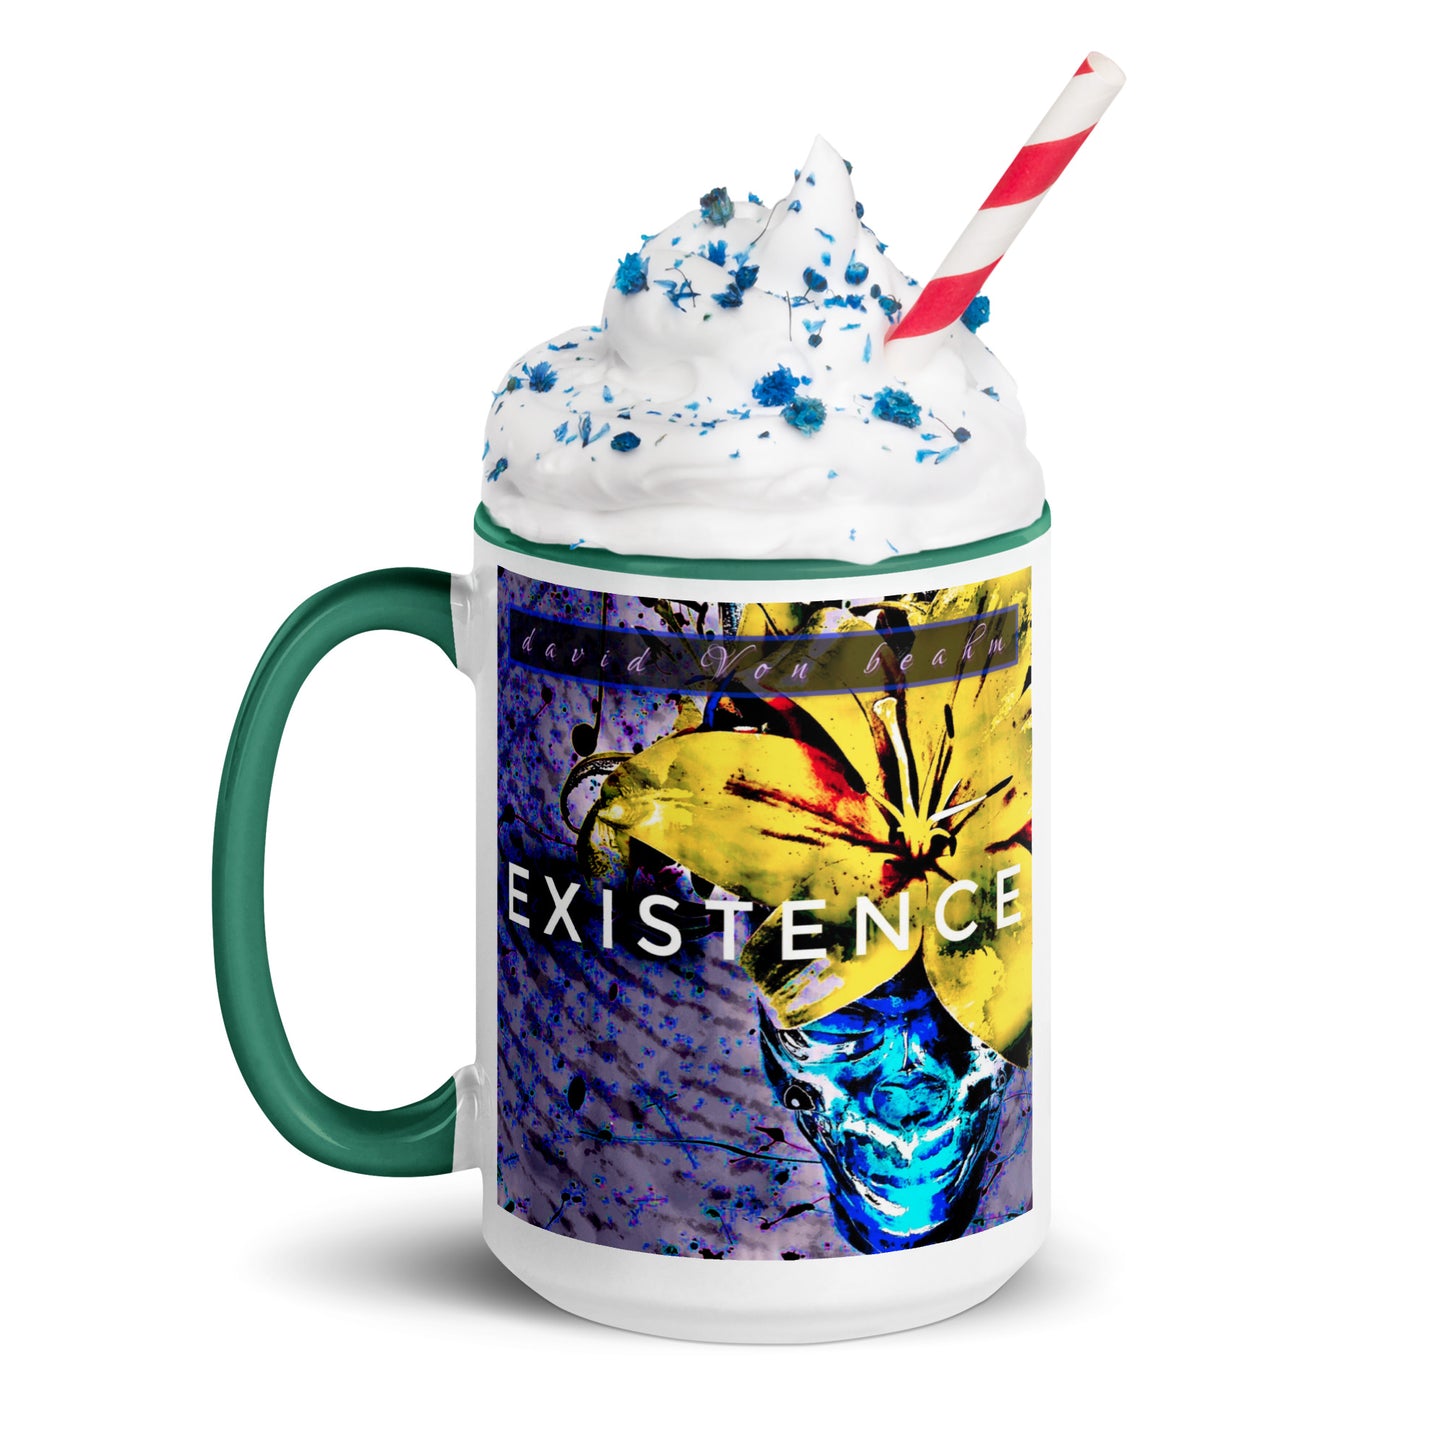 David Von Beahm - Existence Mug With Color Inside